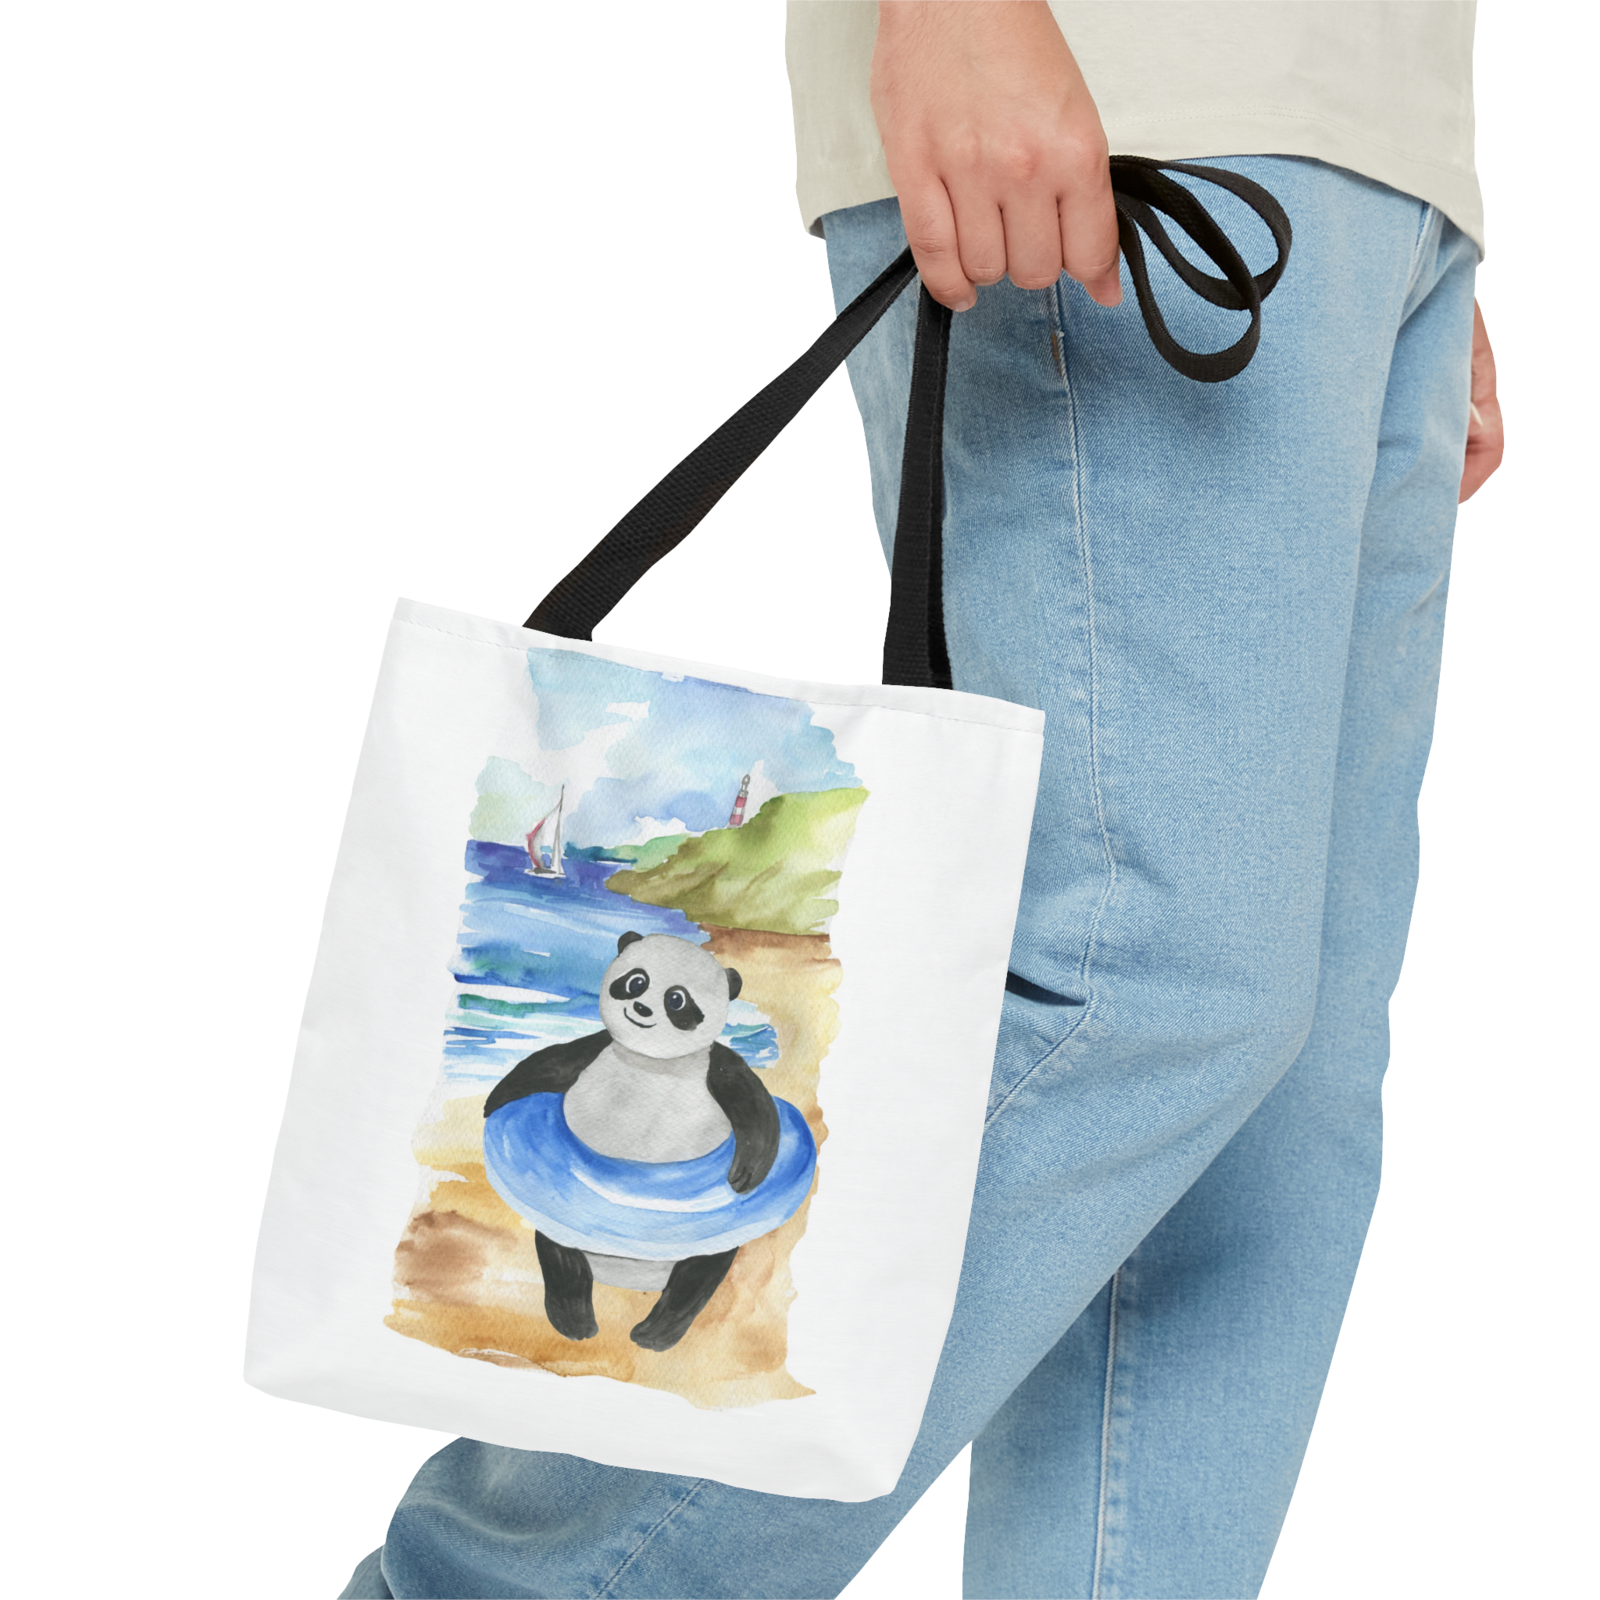 Watercolor Panda with Inner Tube Tote Bag, 3 sizes - $23.56 - $32.31